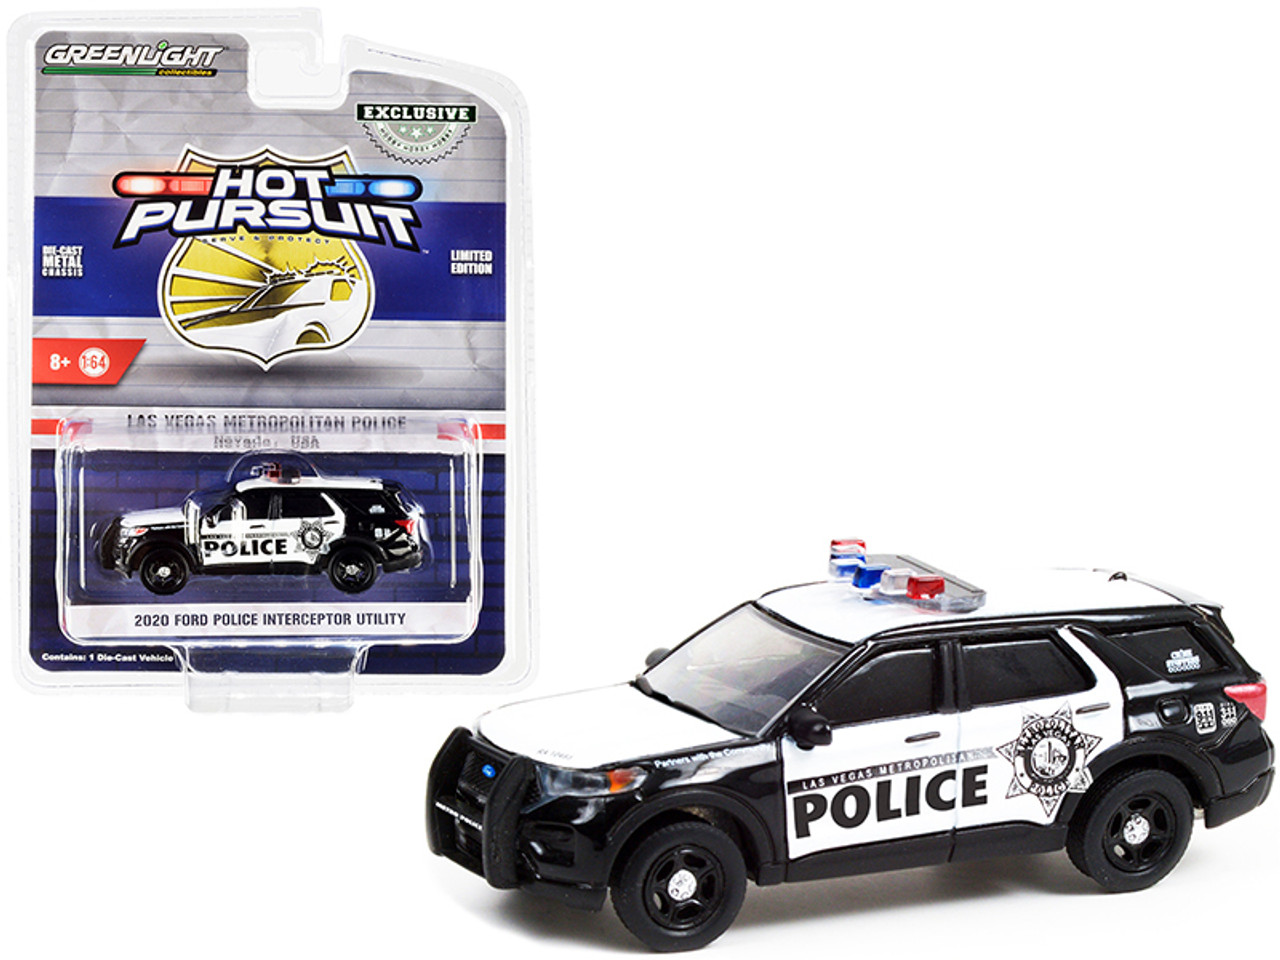 2020 Ford Police Interceptor Utility Black and White "Las Vegas Metropolitan Police" (Nevada) "Hot Pursuit" Series 1/64 Diecast Model Car by Greenlight